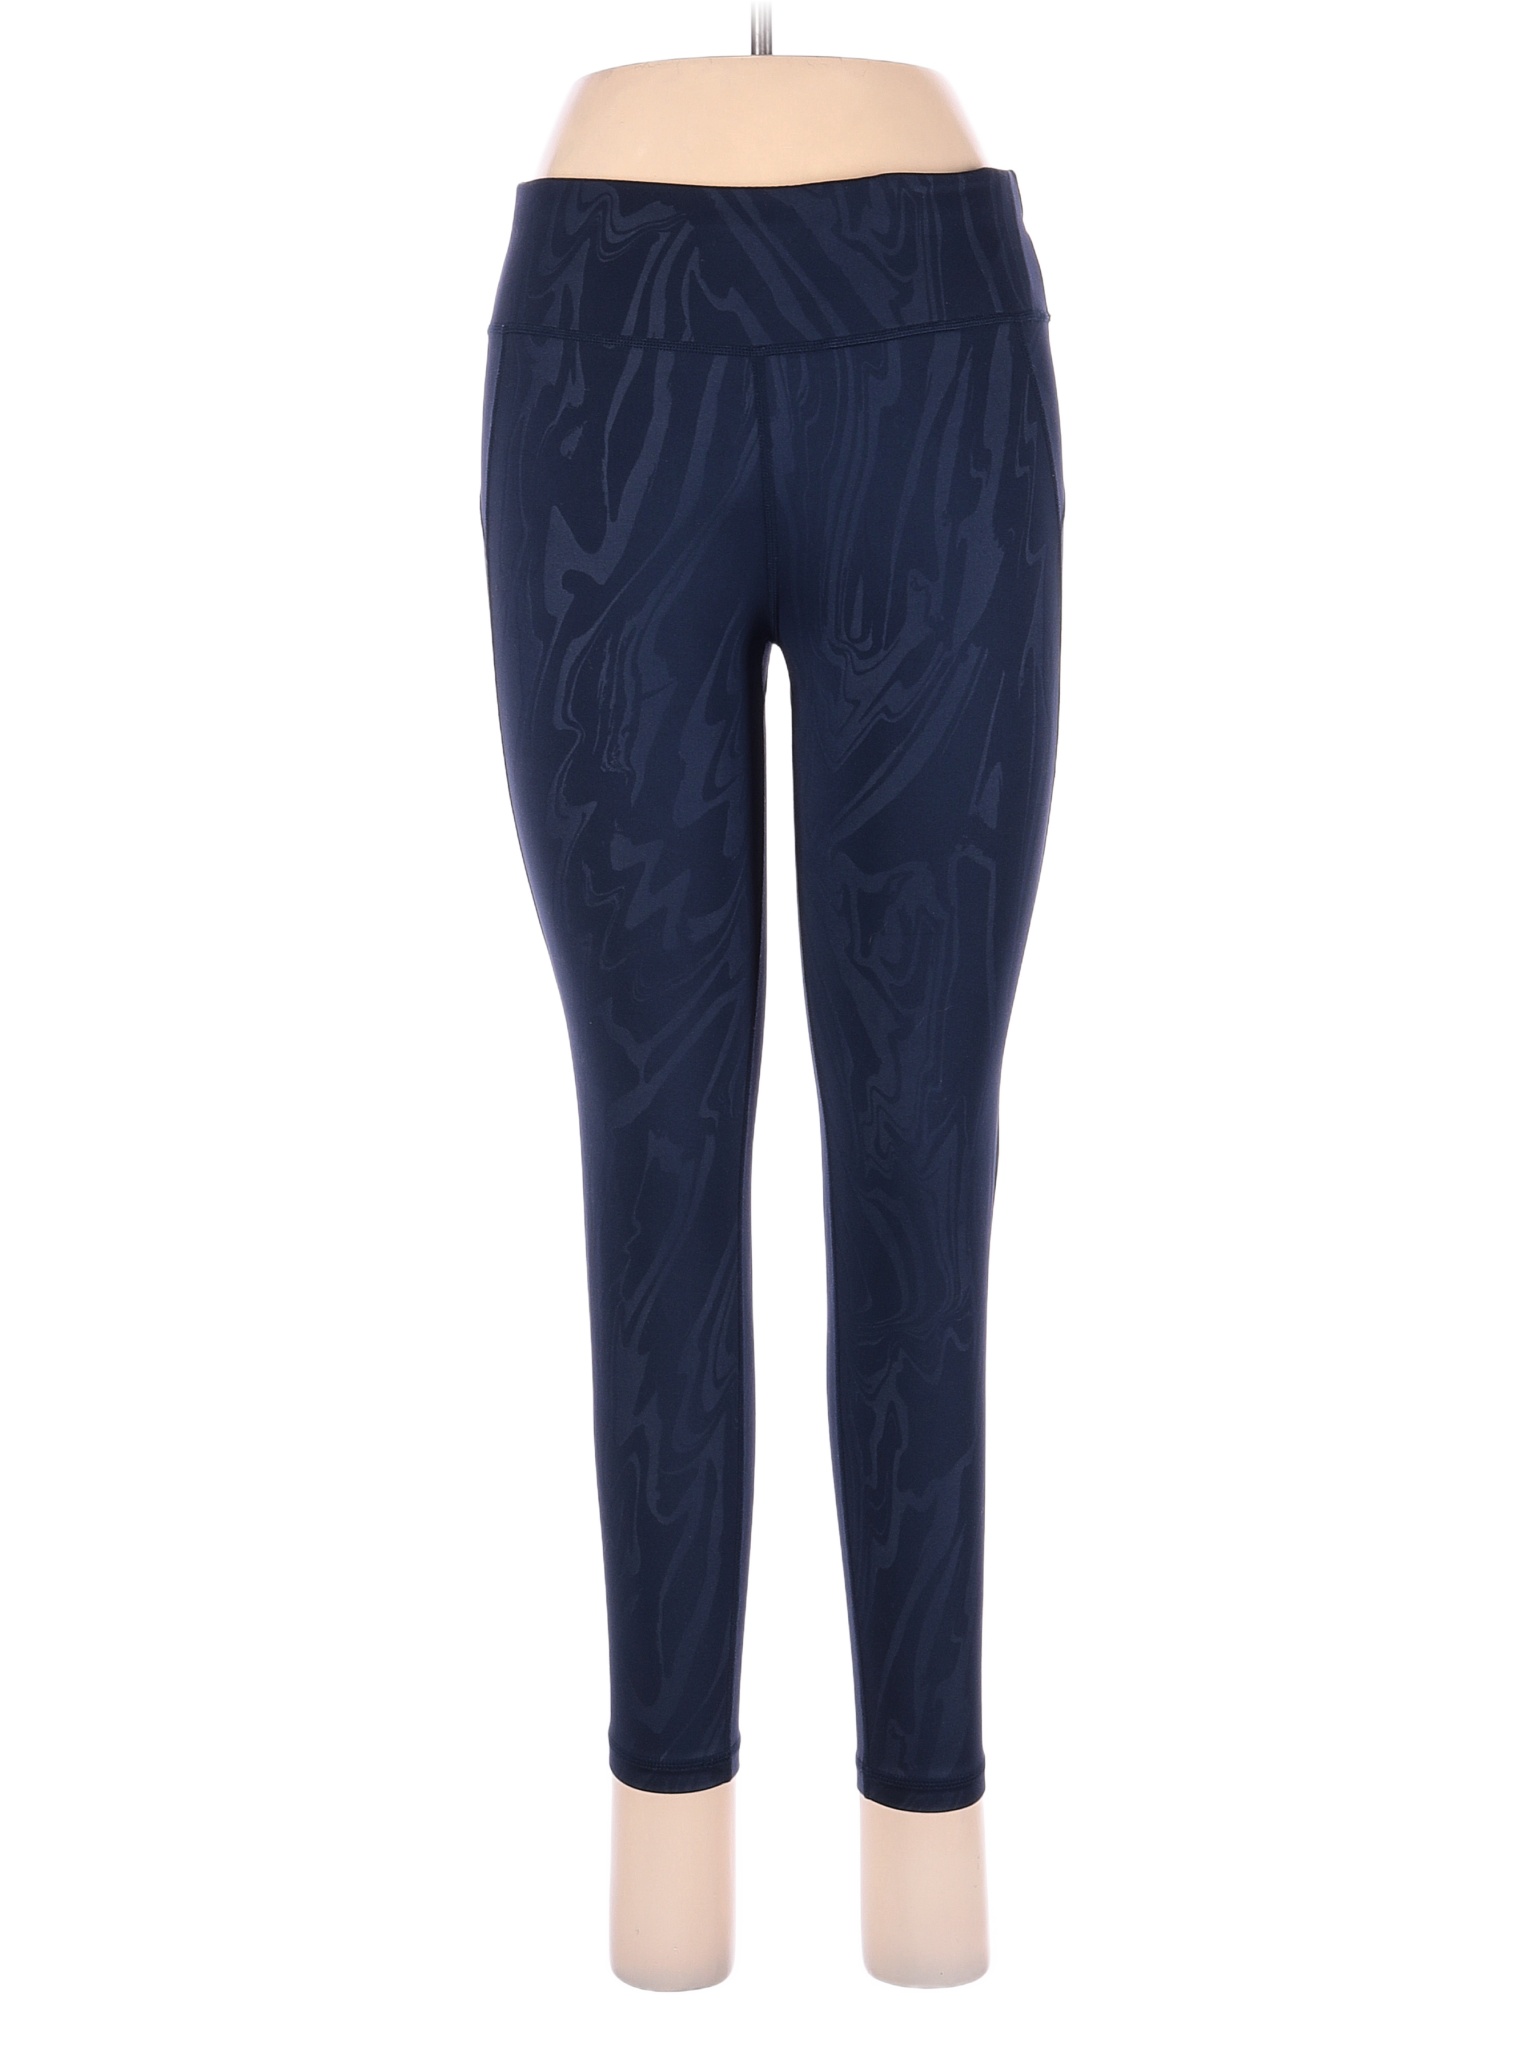 Sweaty Betty Navy Blue Active Pants Size M - 69% off | thredUP